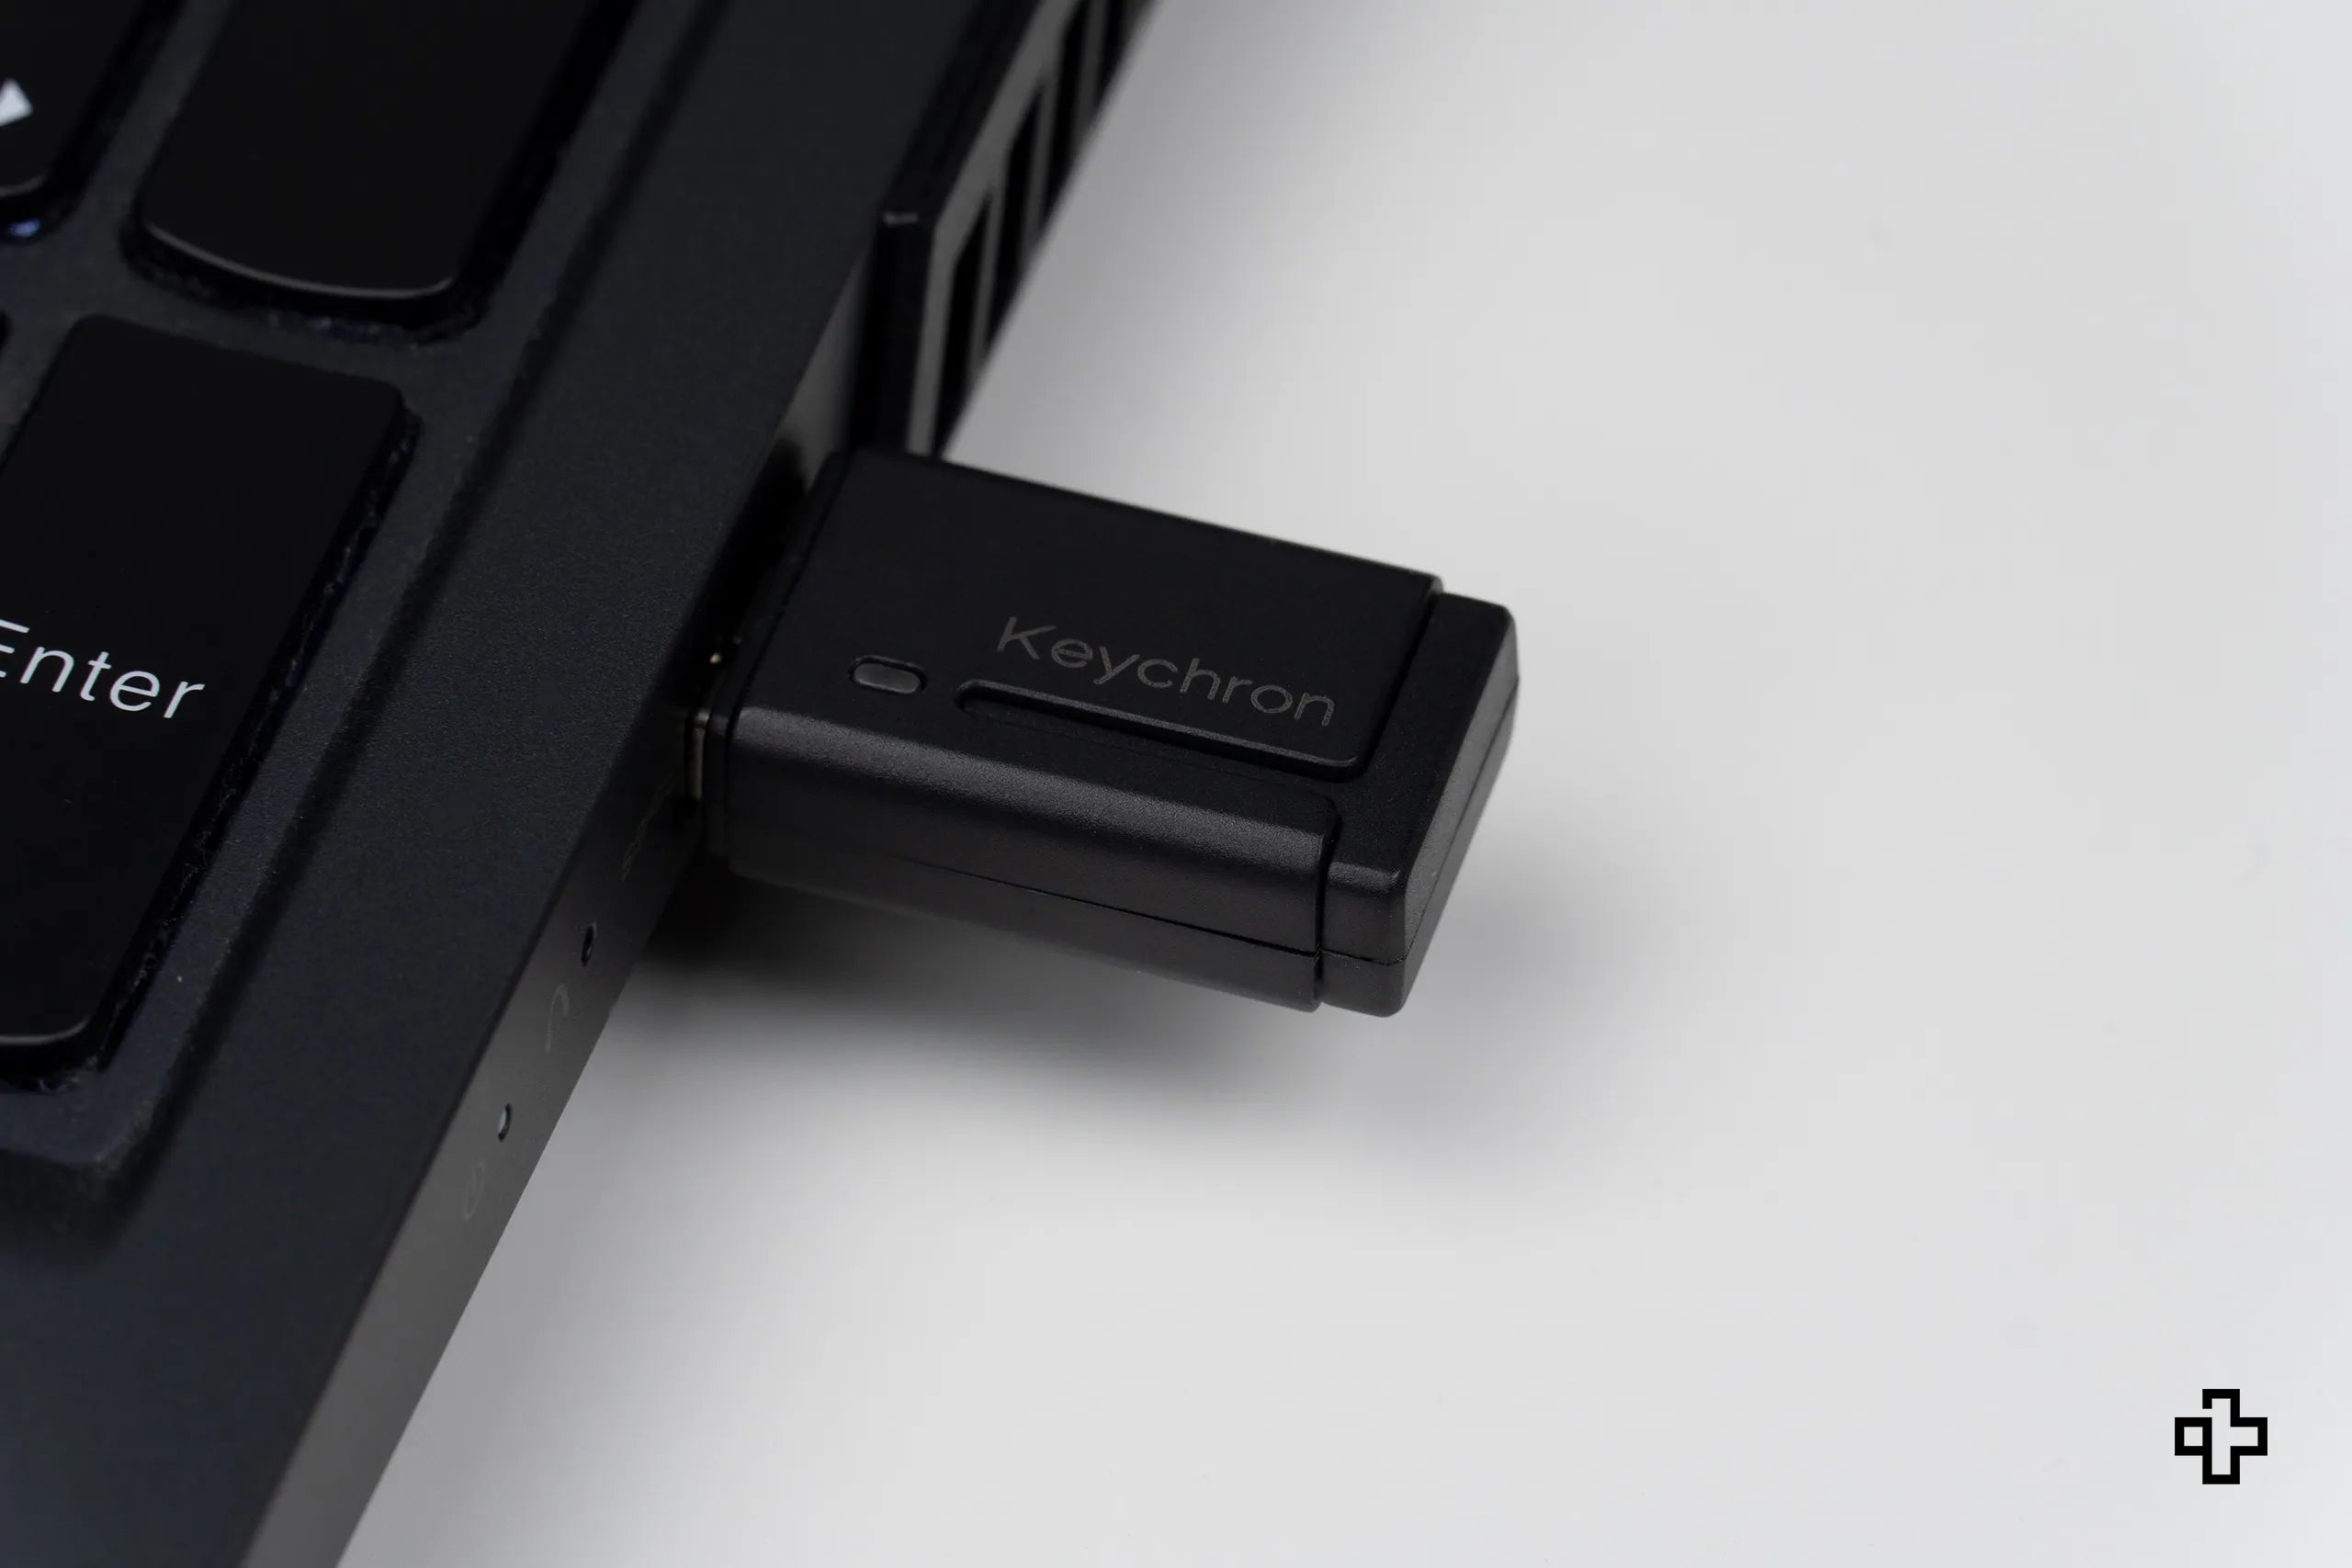 Keychron USB Bluetooth Adapter for Windows 5.0 